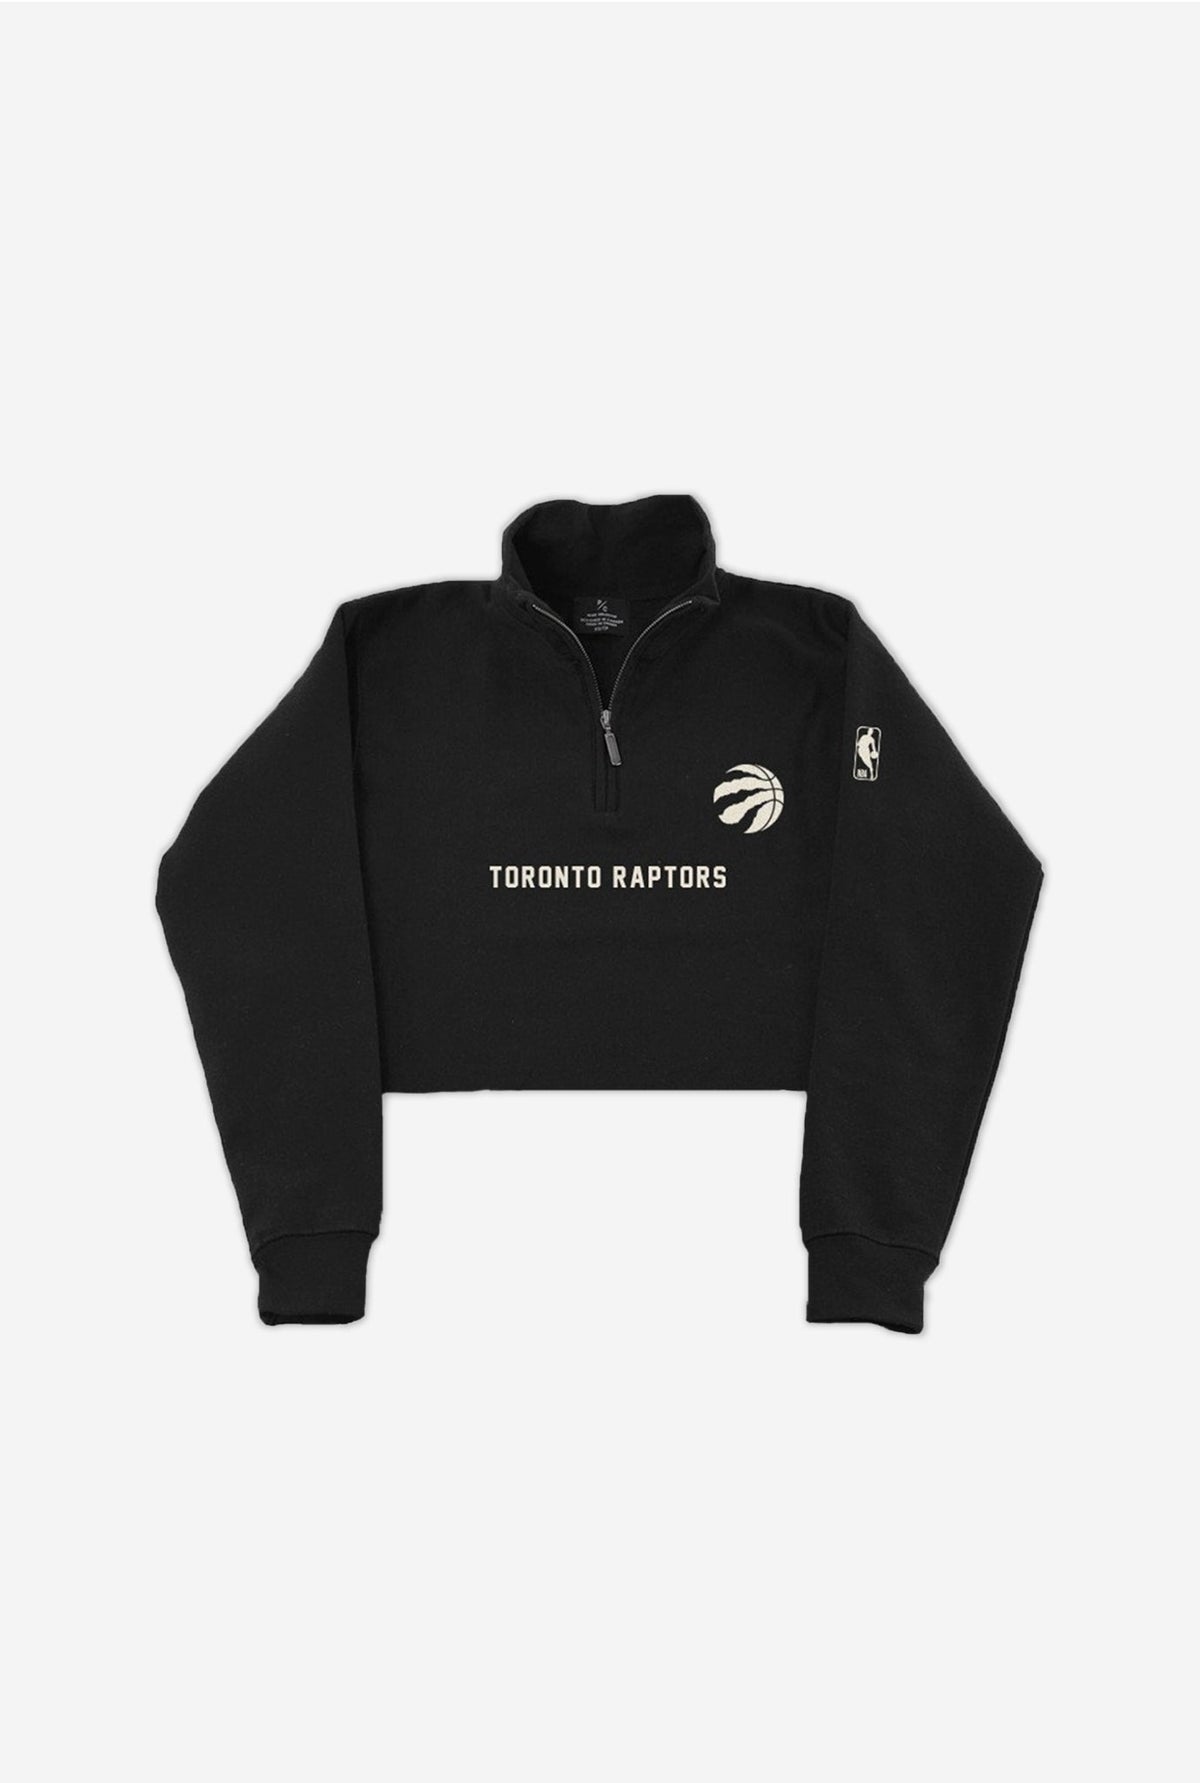 Toronto Raptors Cropped Quarter Zip Sweater - Black